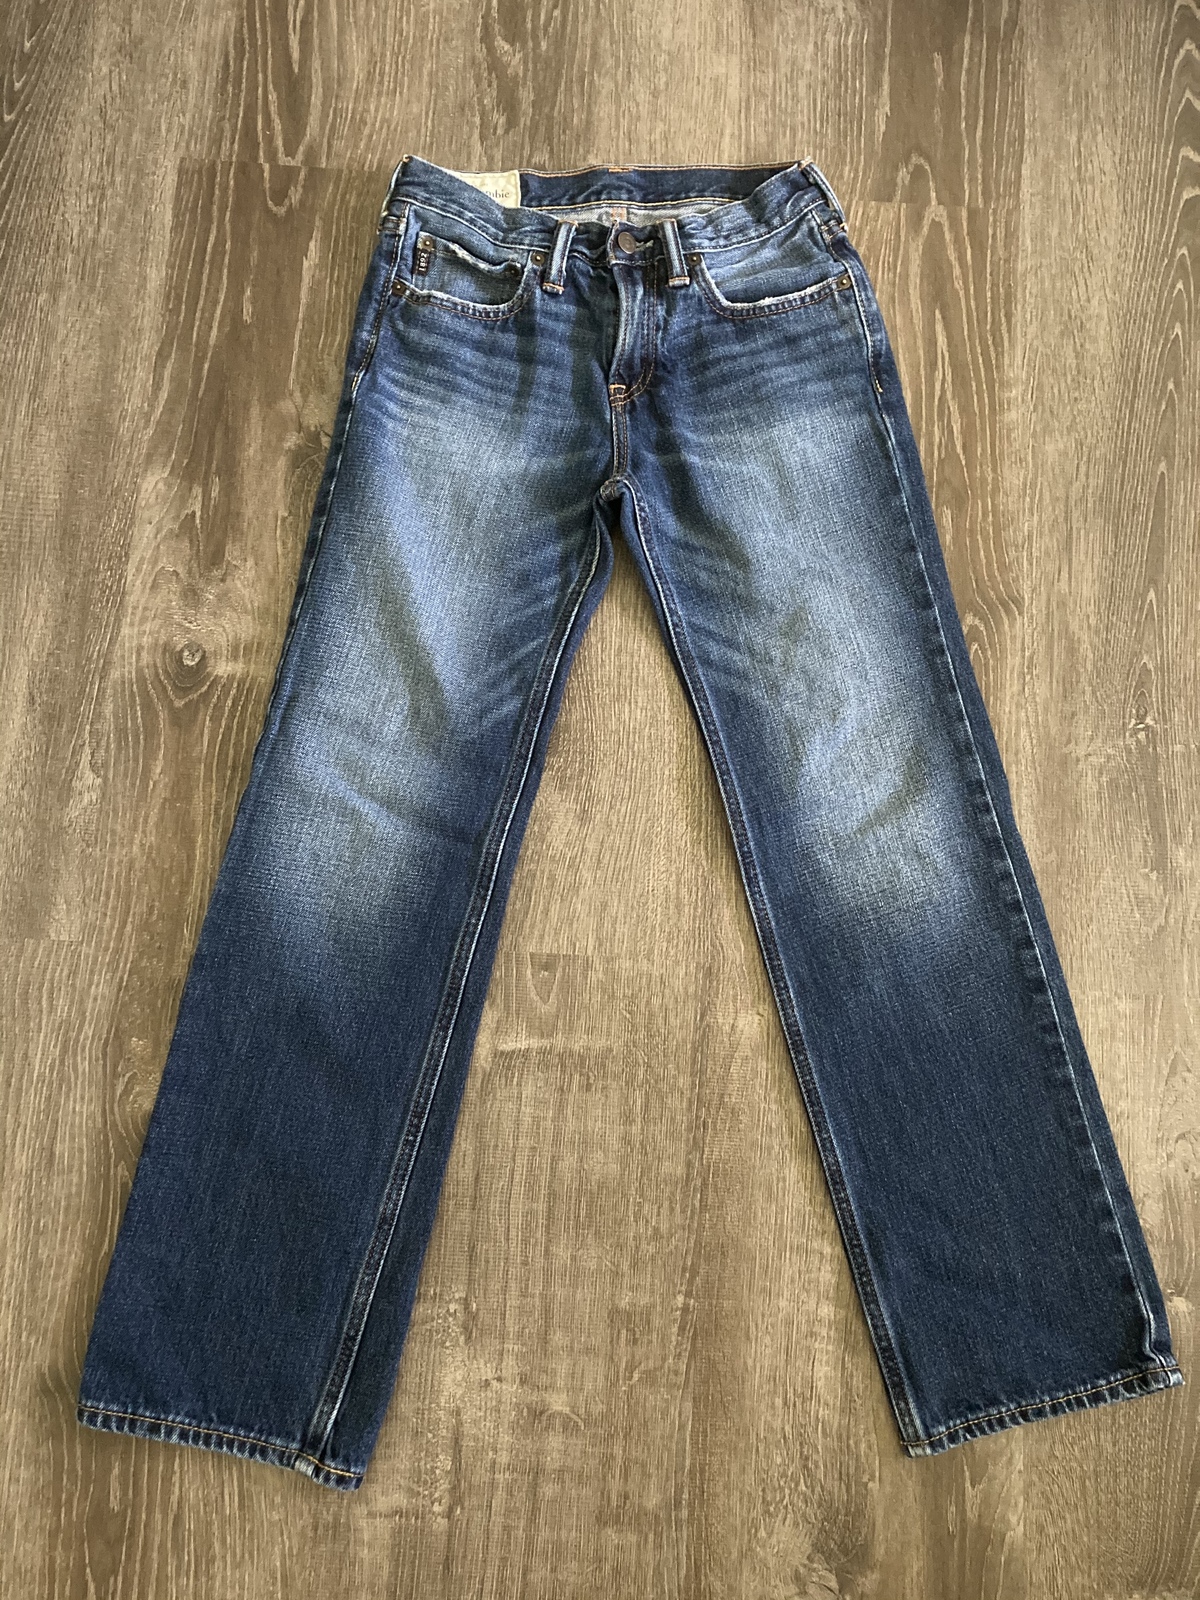 Abercrombie Kids Size 14 Jeans - £12.57 GBP